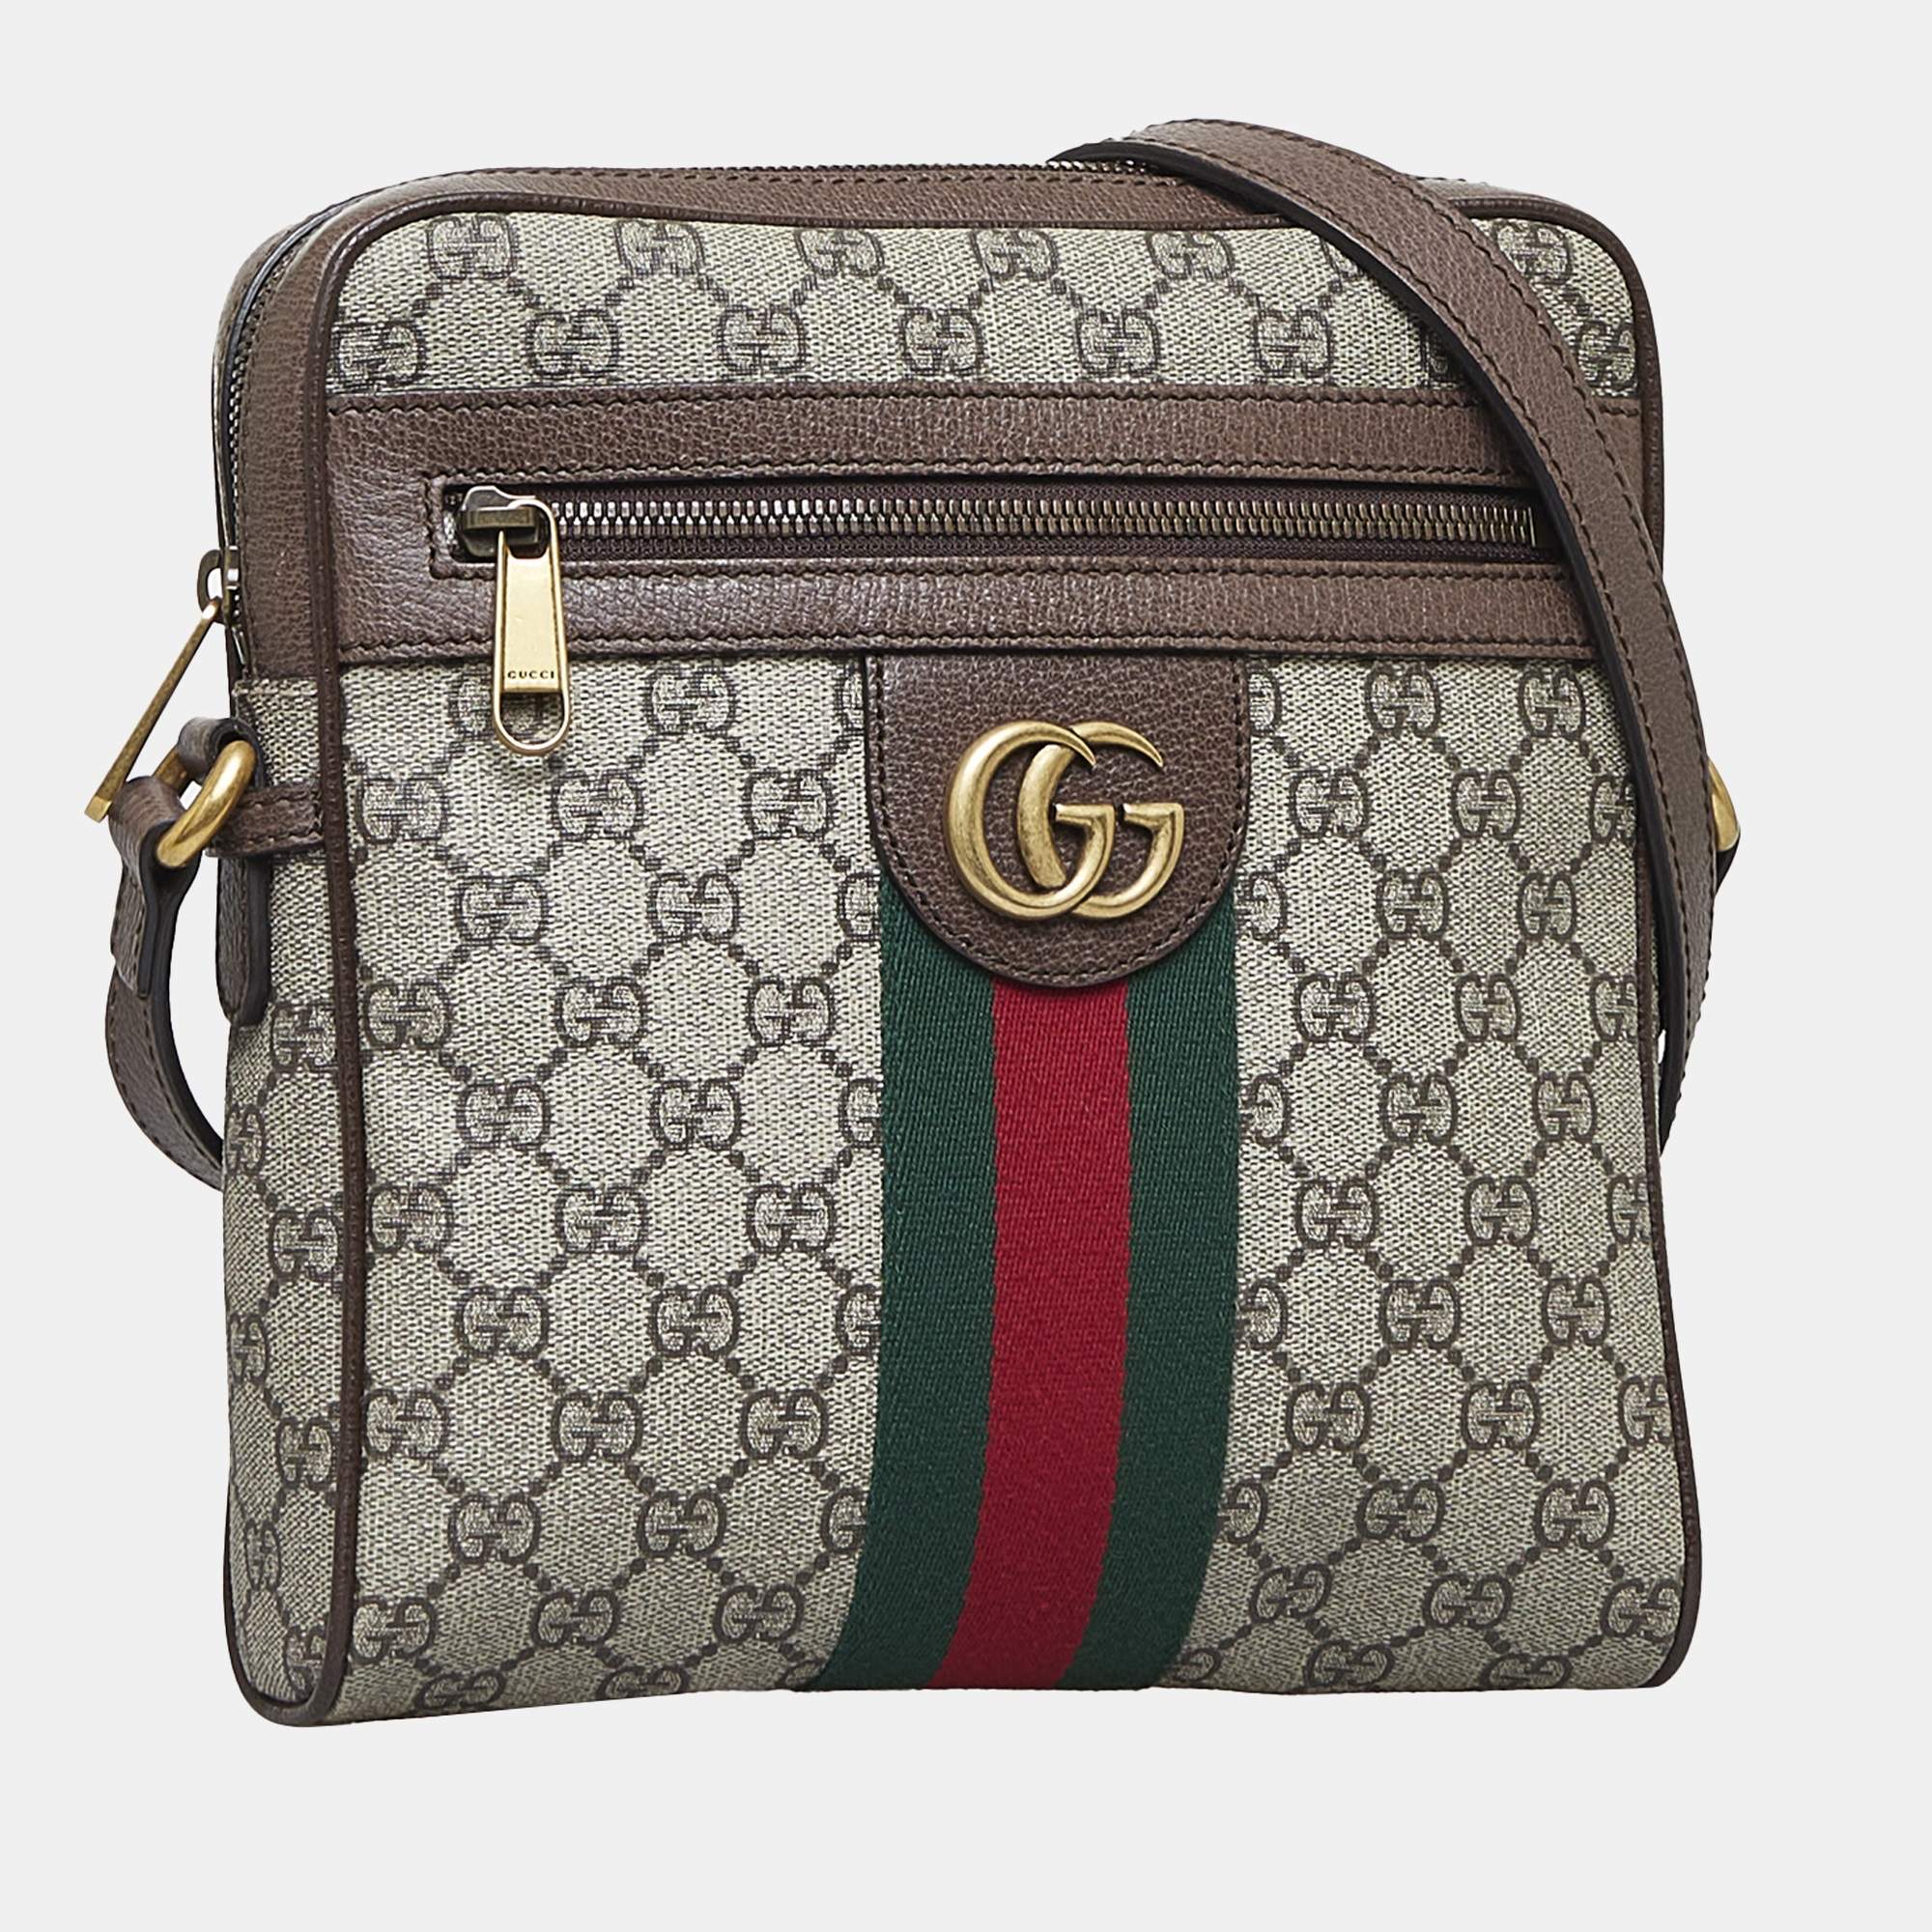 Gg supreme messenger bag - Gucci - Women